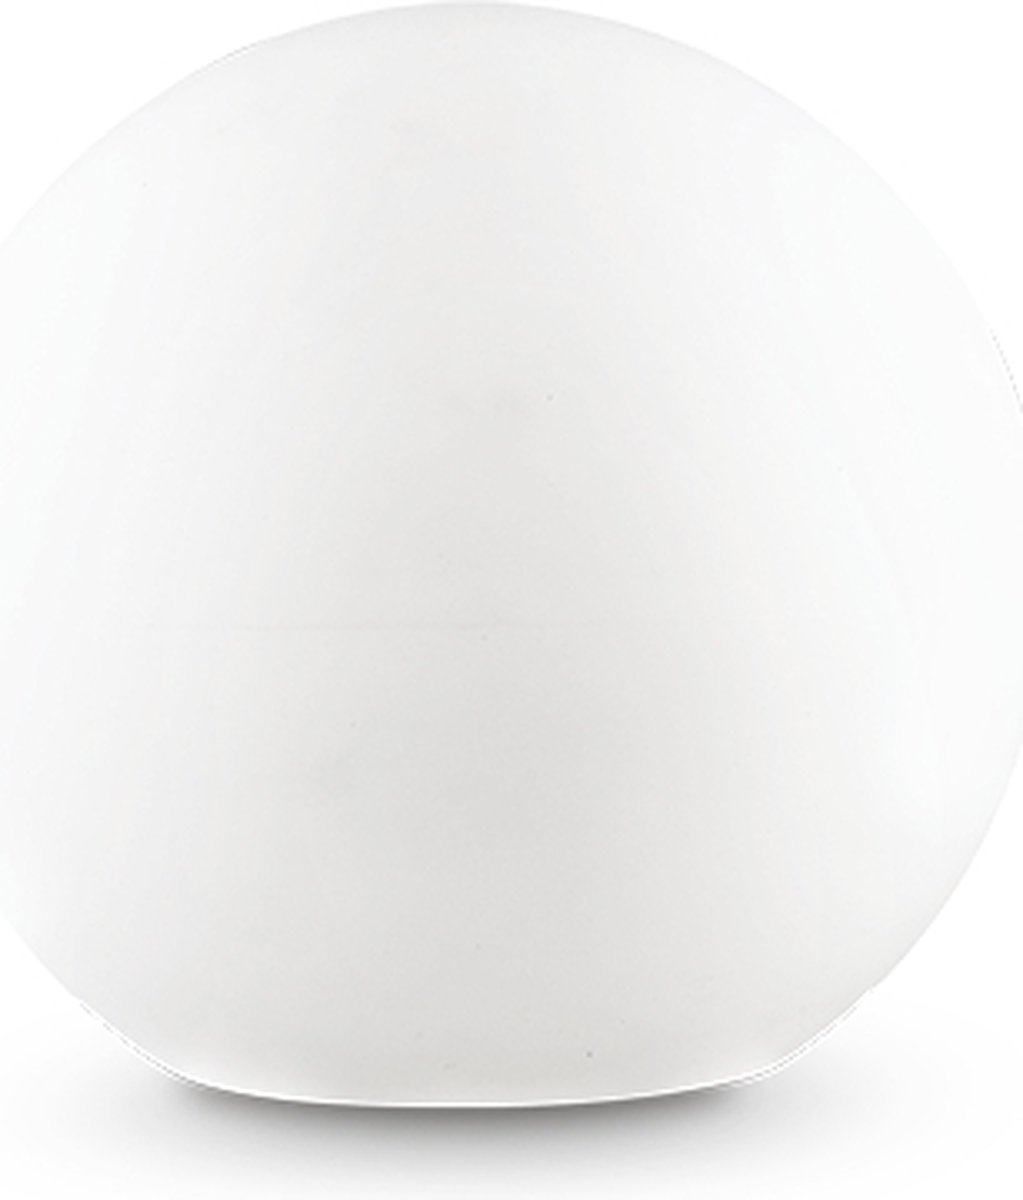 Ideal Lux Sole - Vloerlamp Modern - Wit - H:48cm - E27 - Voor Binnen - Metaal - Vloerlampen - Staande lamp - Staande lampen - Woonkamer - Slaapkamer